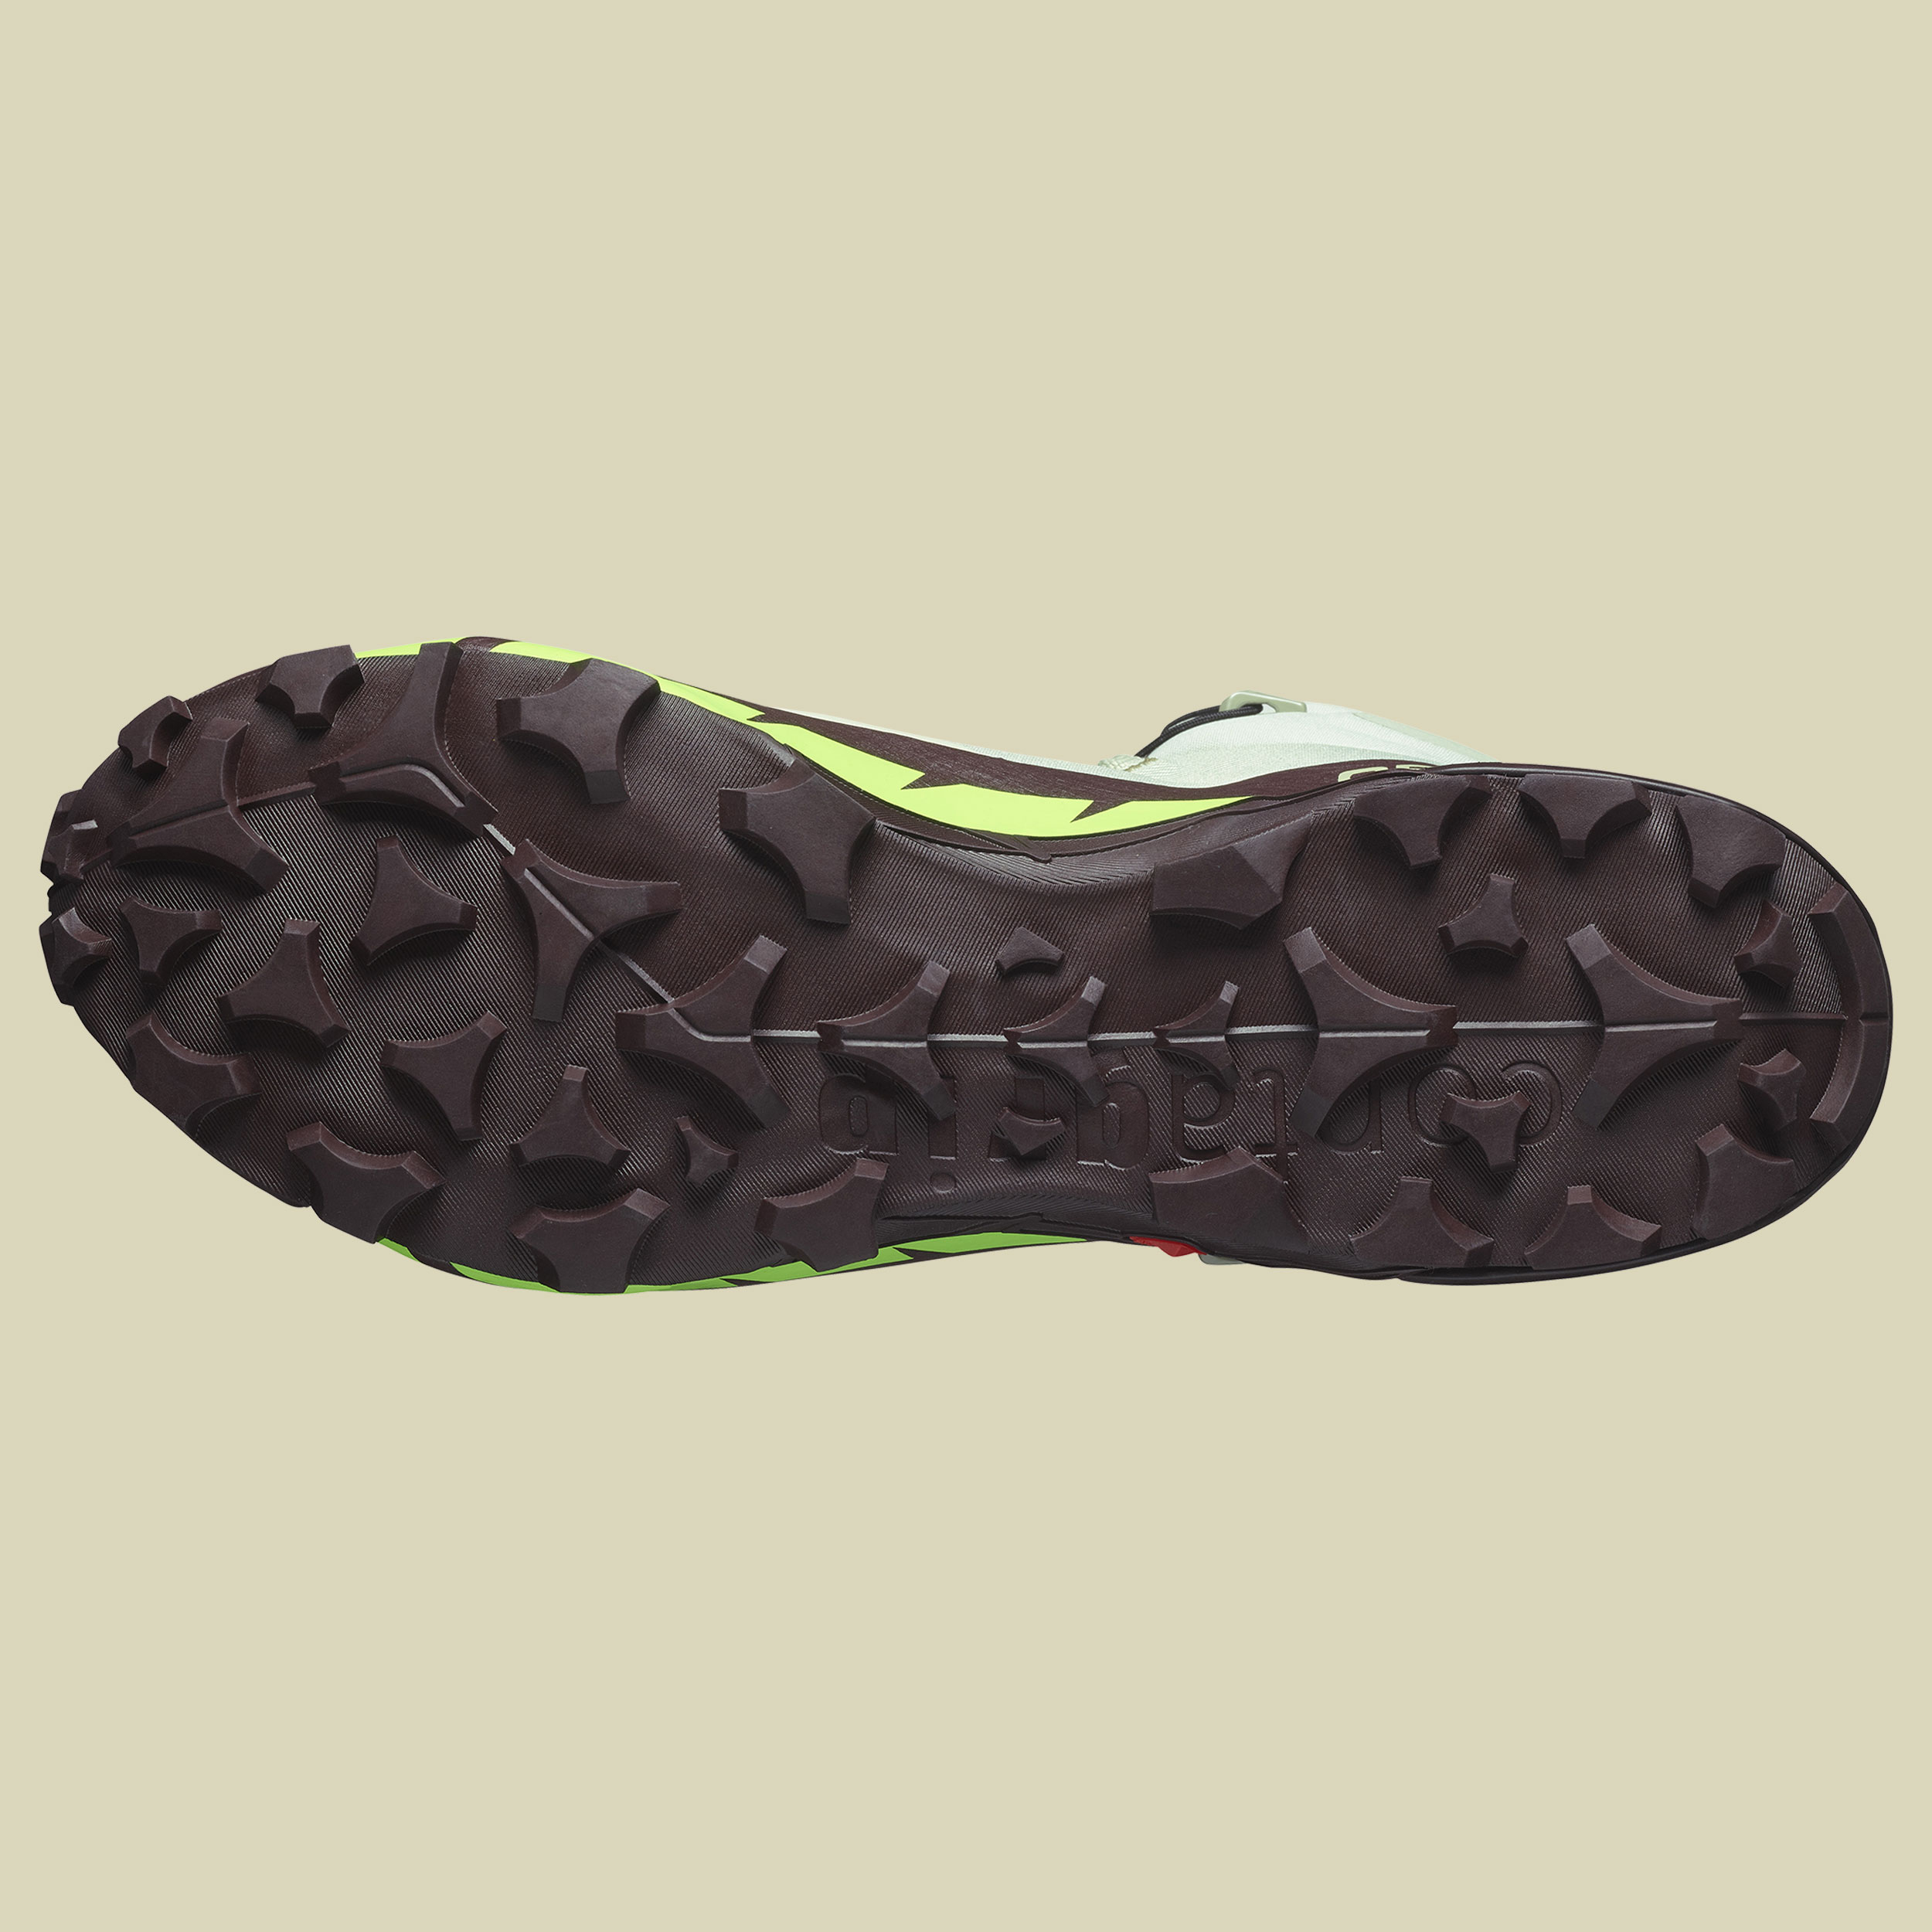 Cross Hike Mid GTX 2 Men Größe UK 11,5 Farbe desert sage/green gecko/chocolate plum